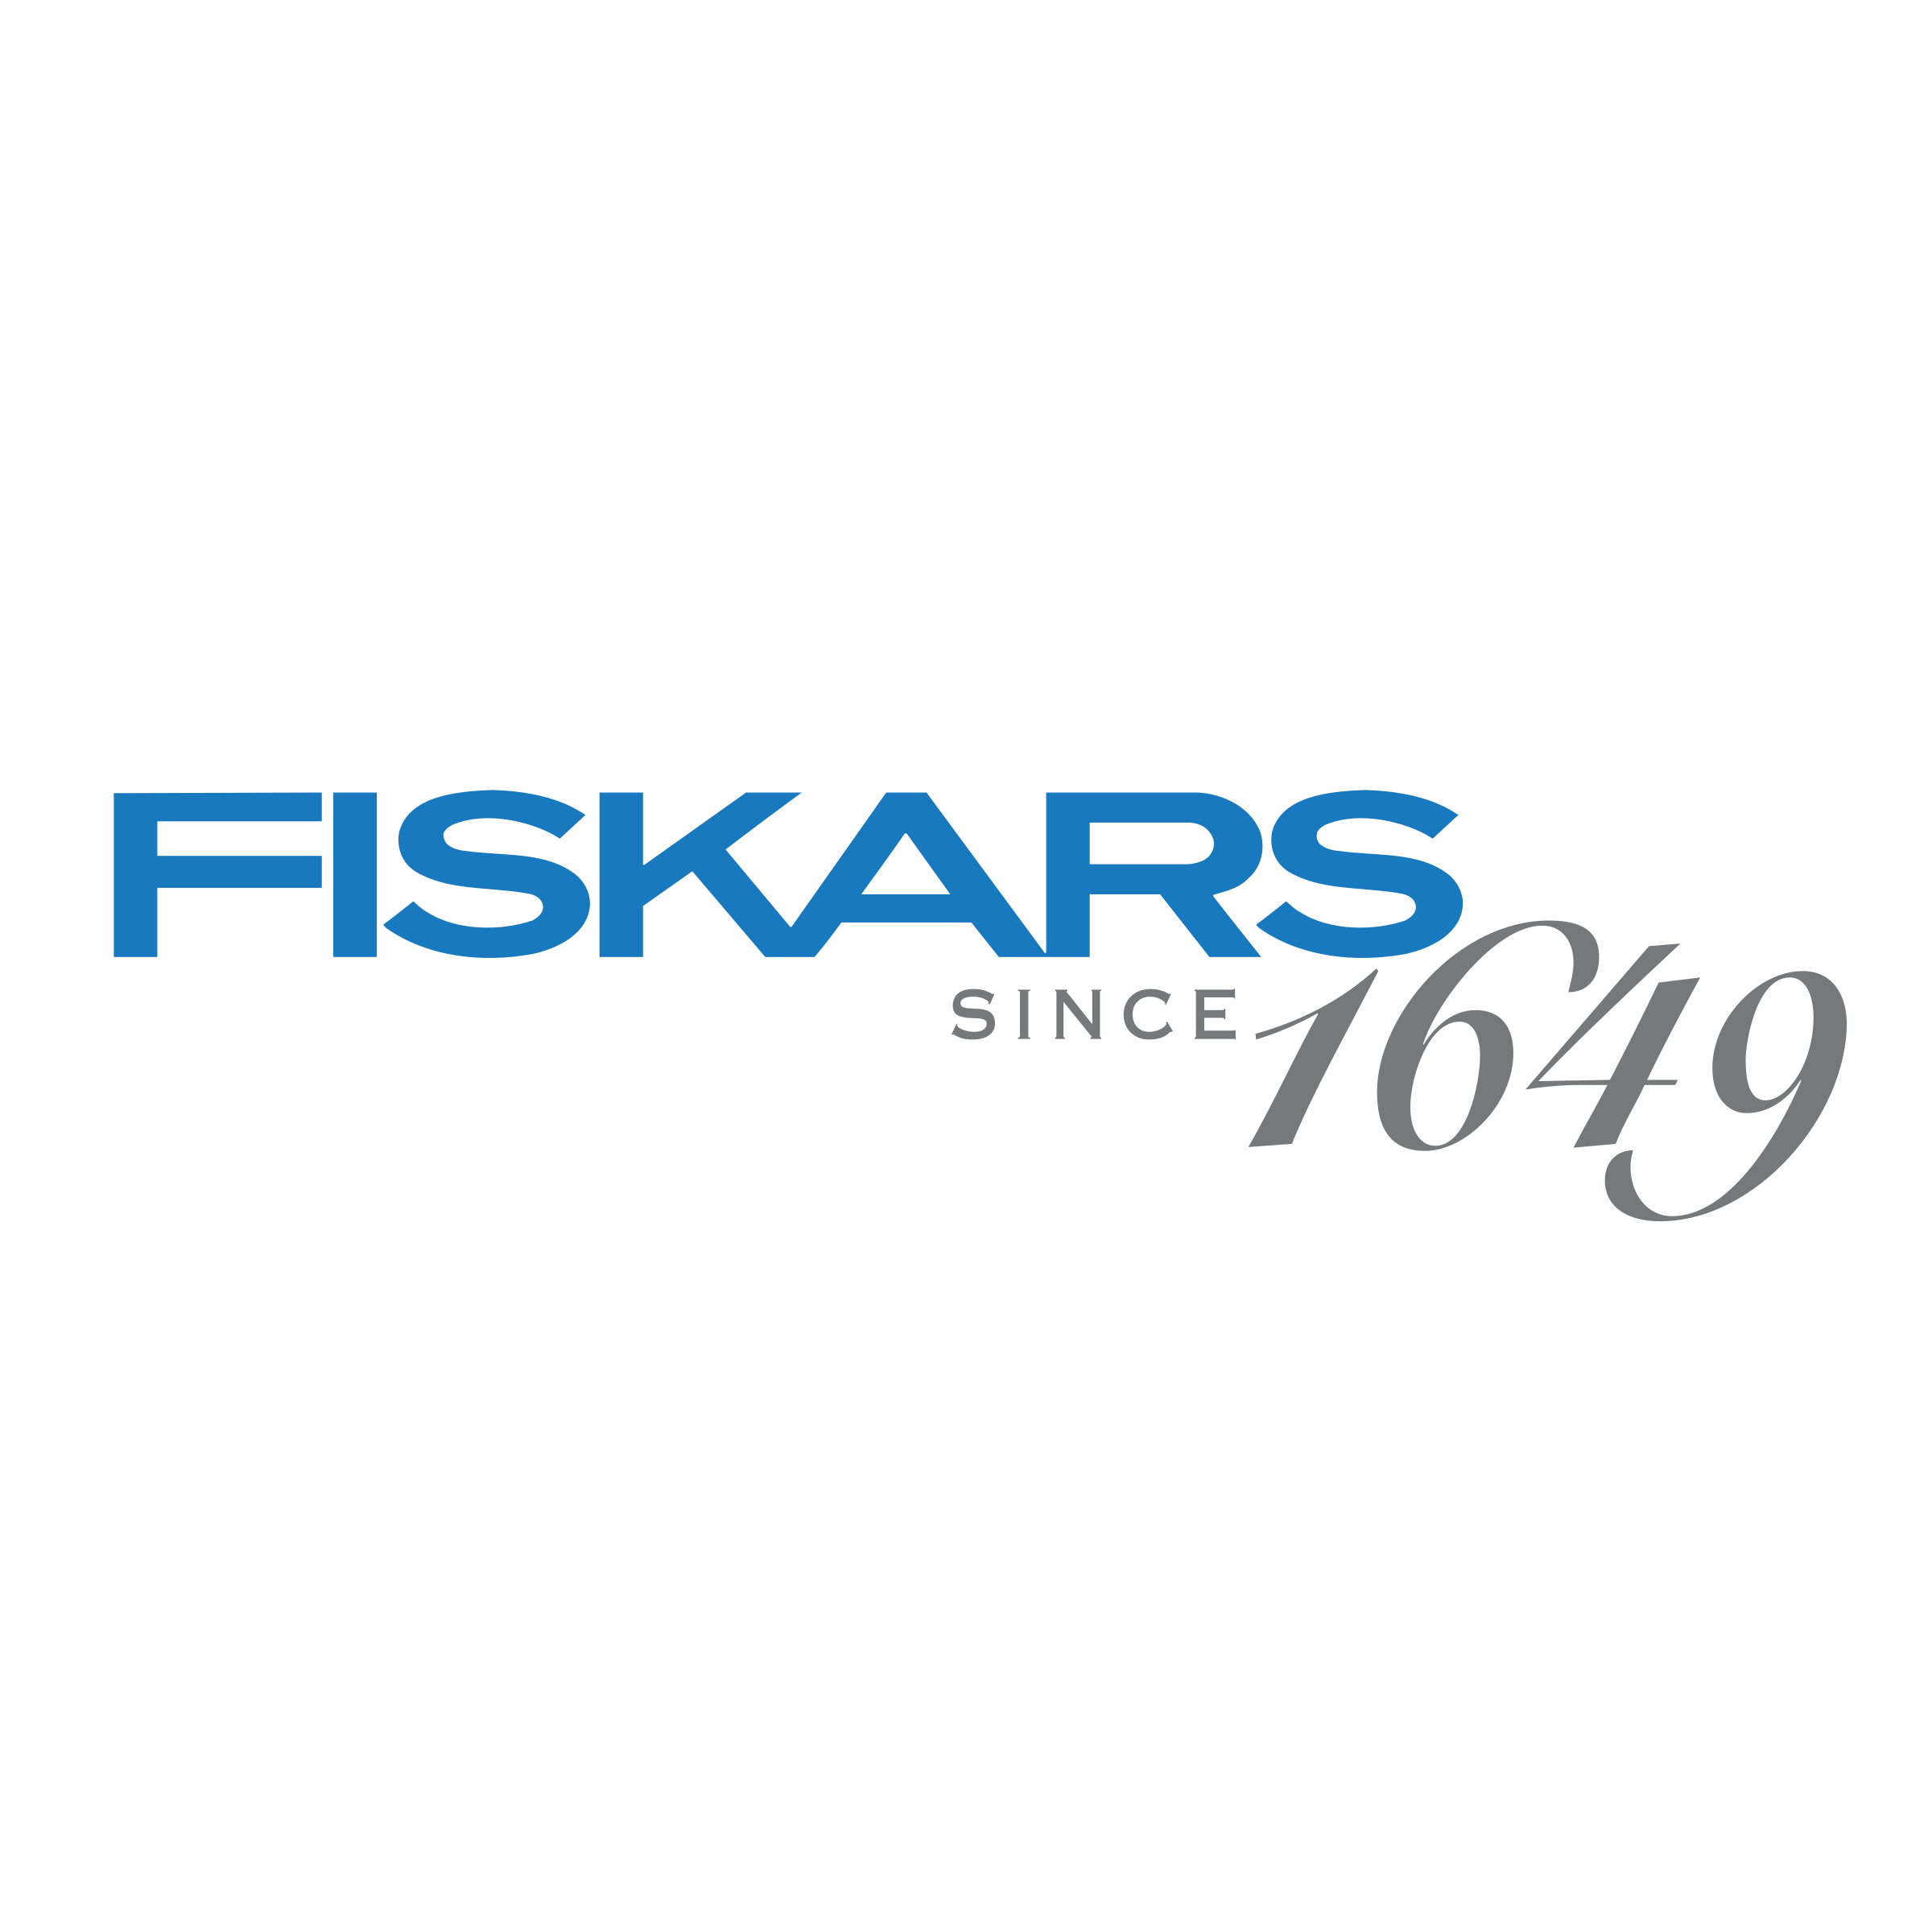 Fiskars Logo PNG Transparent & SVG Vector.